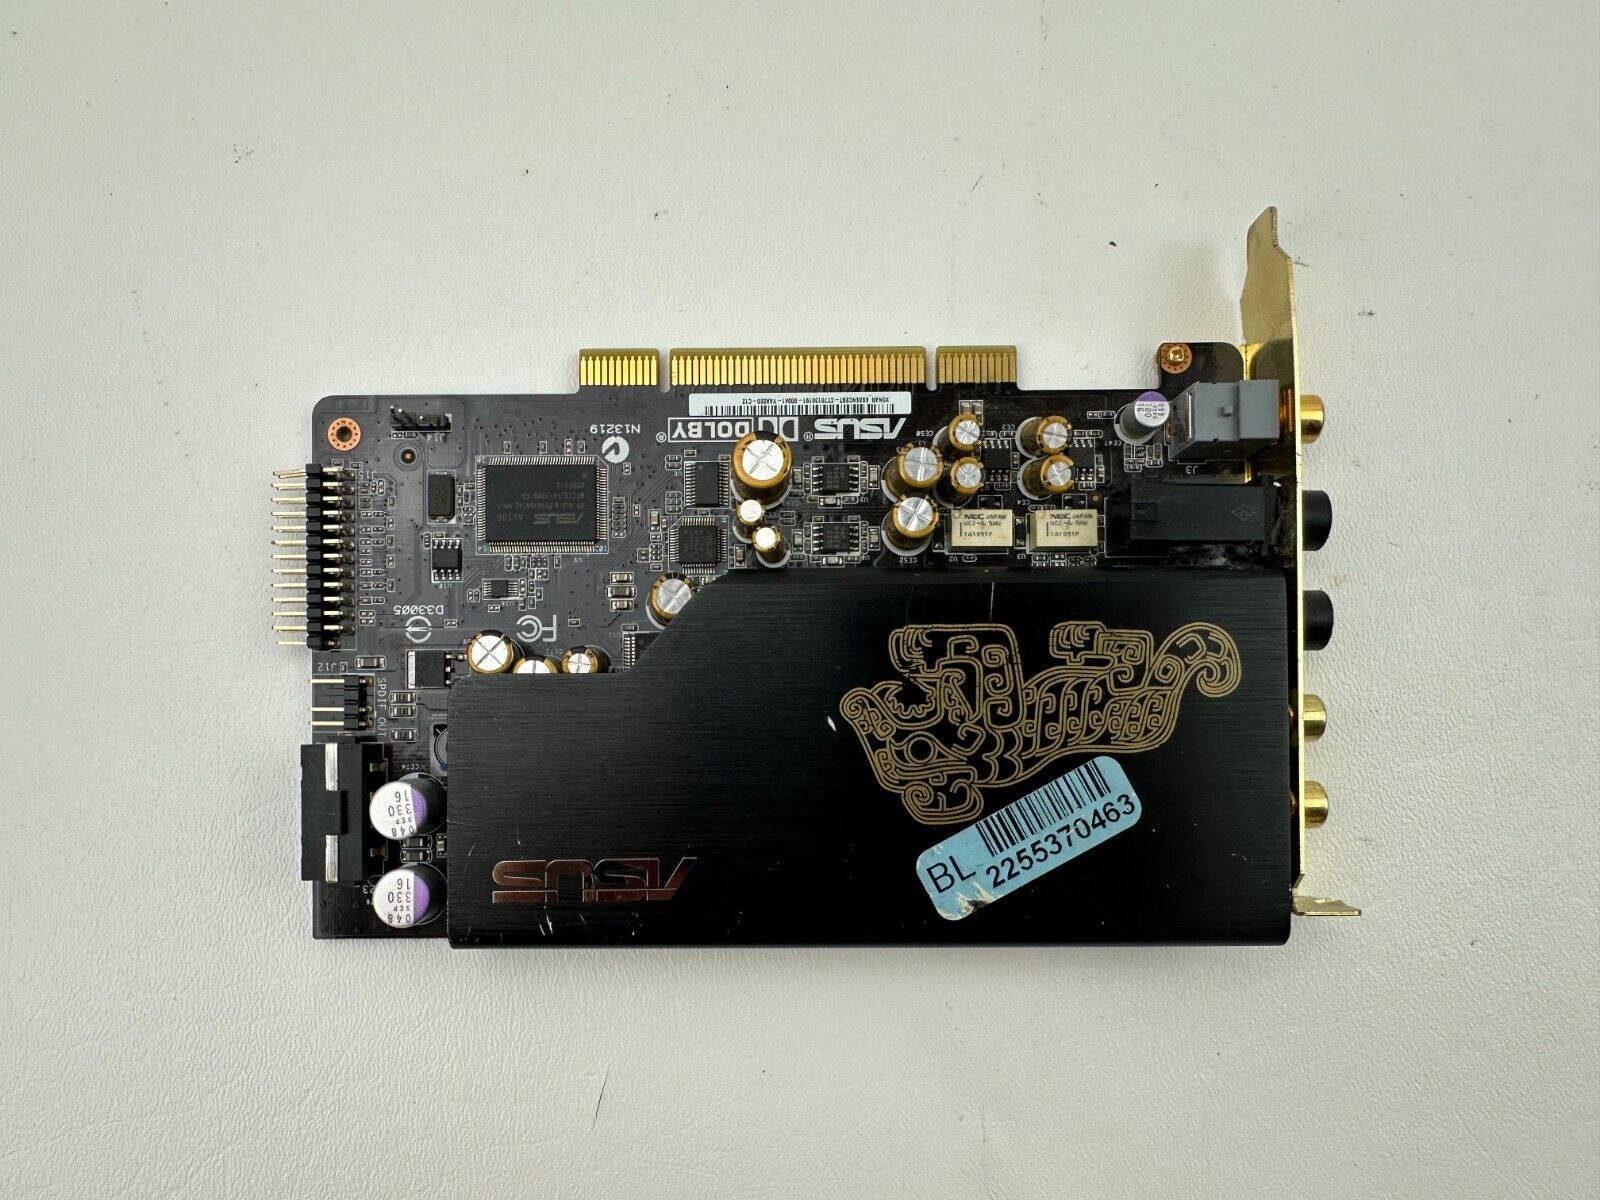 Asus Xonar Essence ST Internal PCI Sound Card